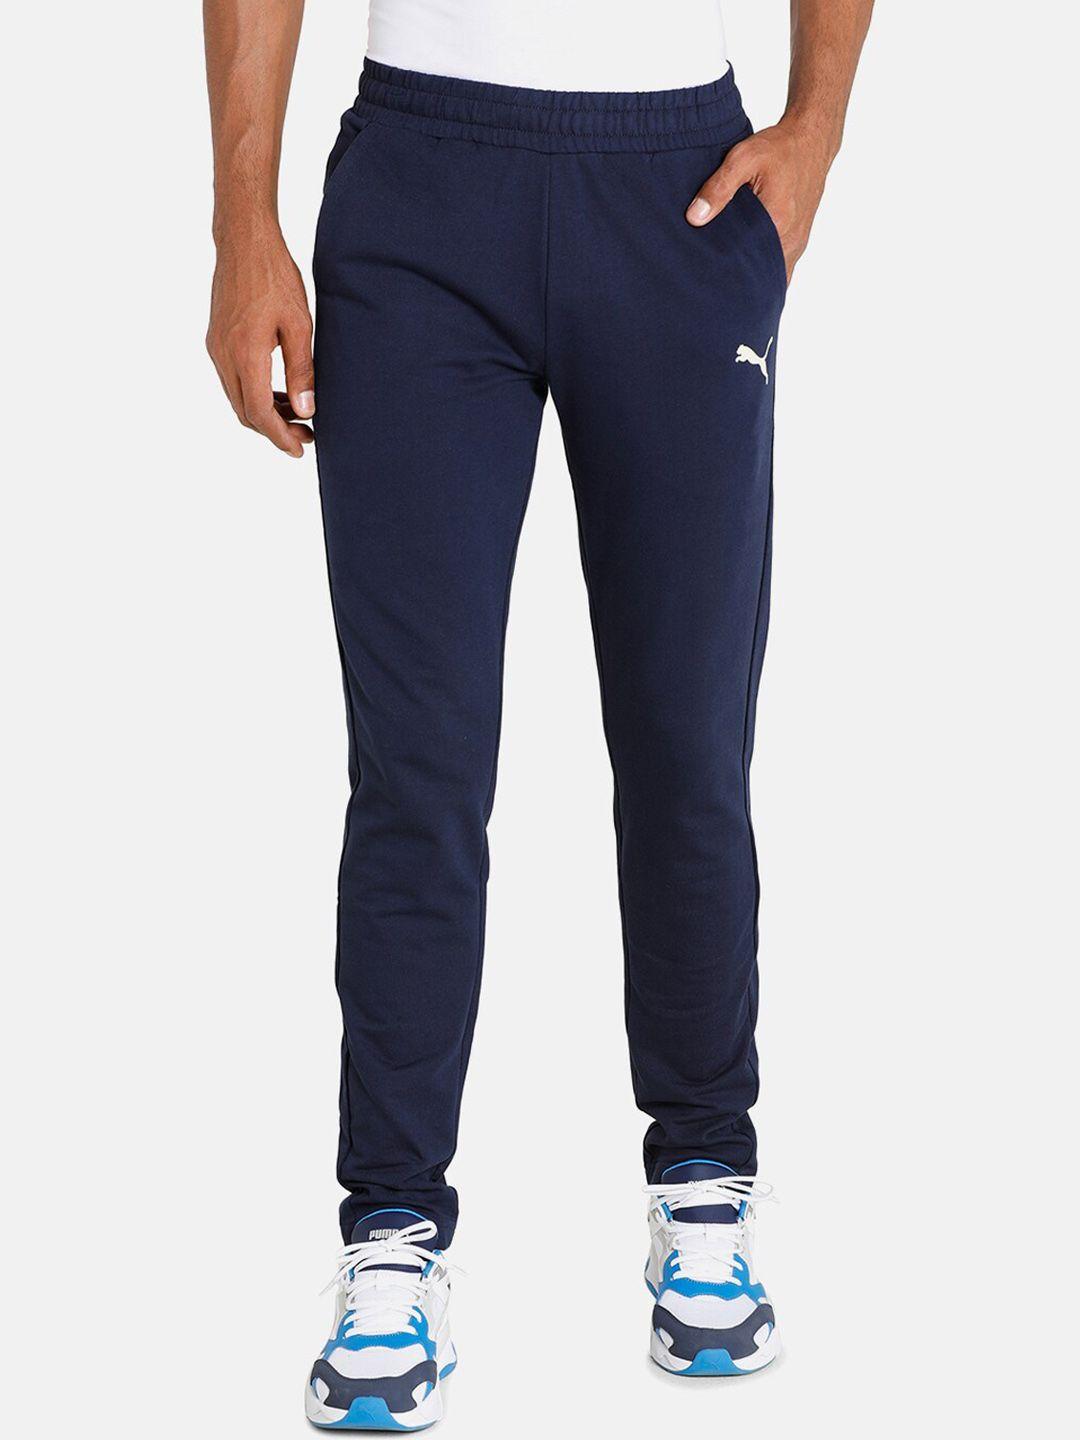 puma men navy blue solid track pants with brand logo detailing at back